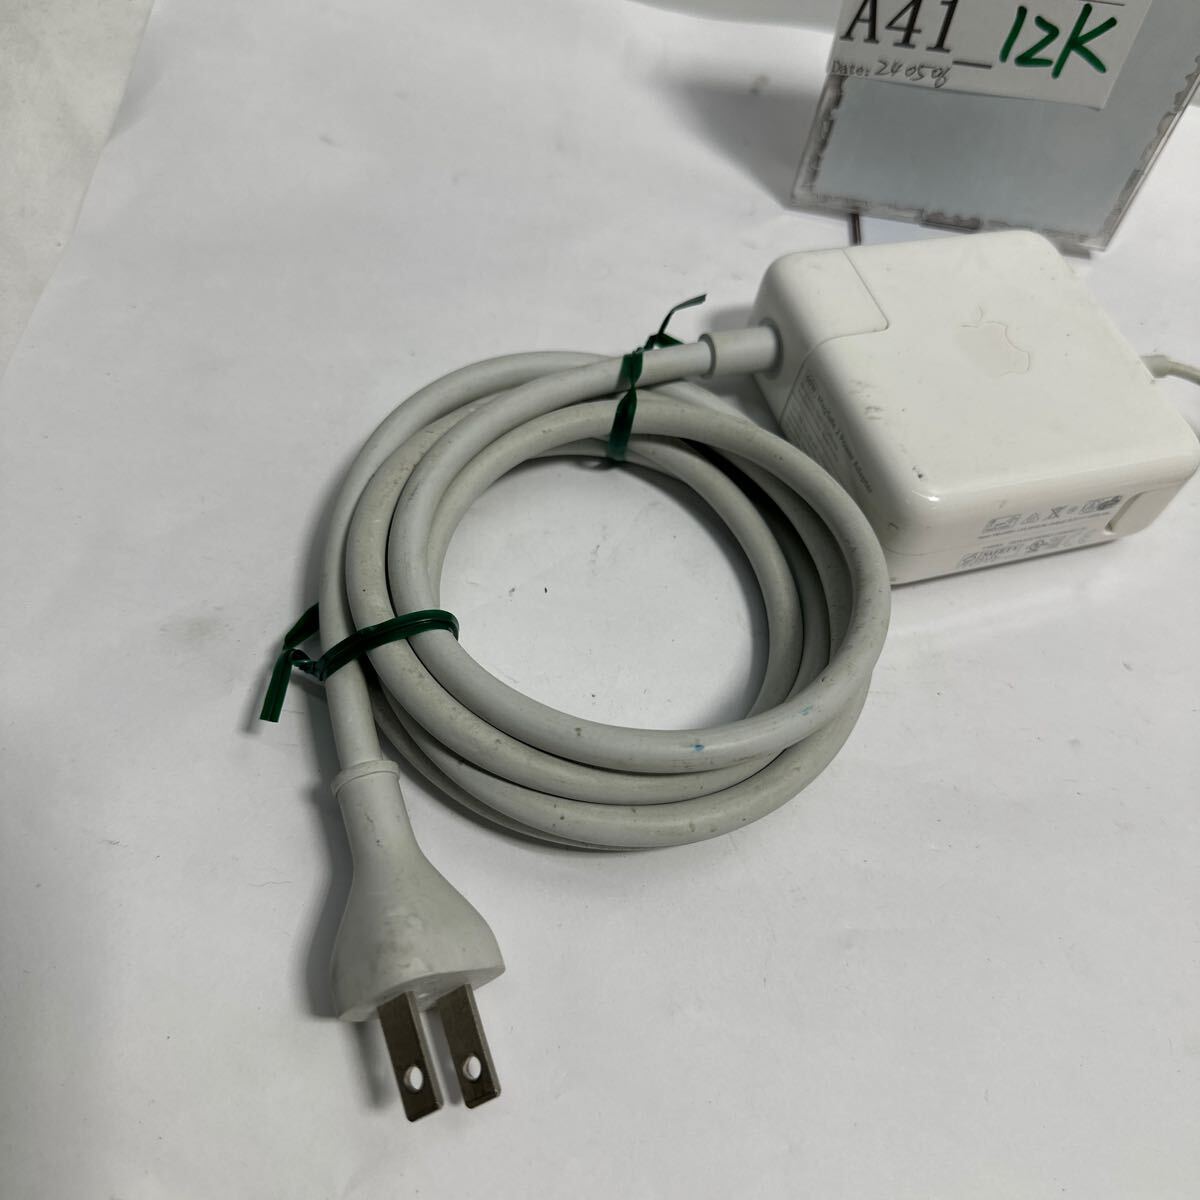 「A41_12K」Apple 純正 60W MagSafe 2 Power Adapter A1435 MacBook ACアダプター(240506)